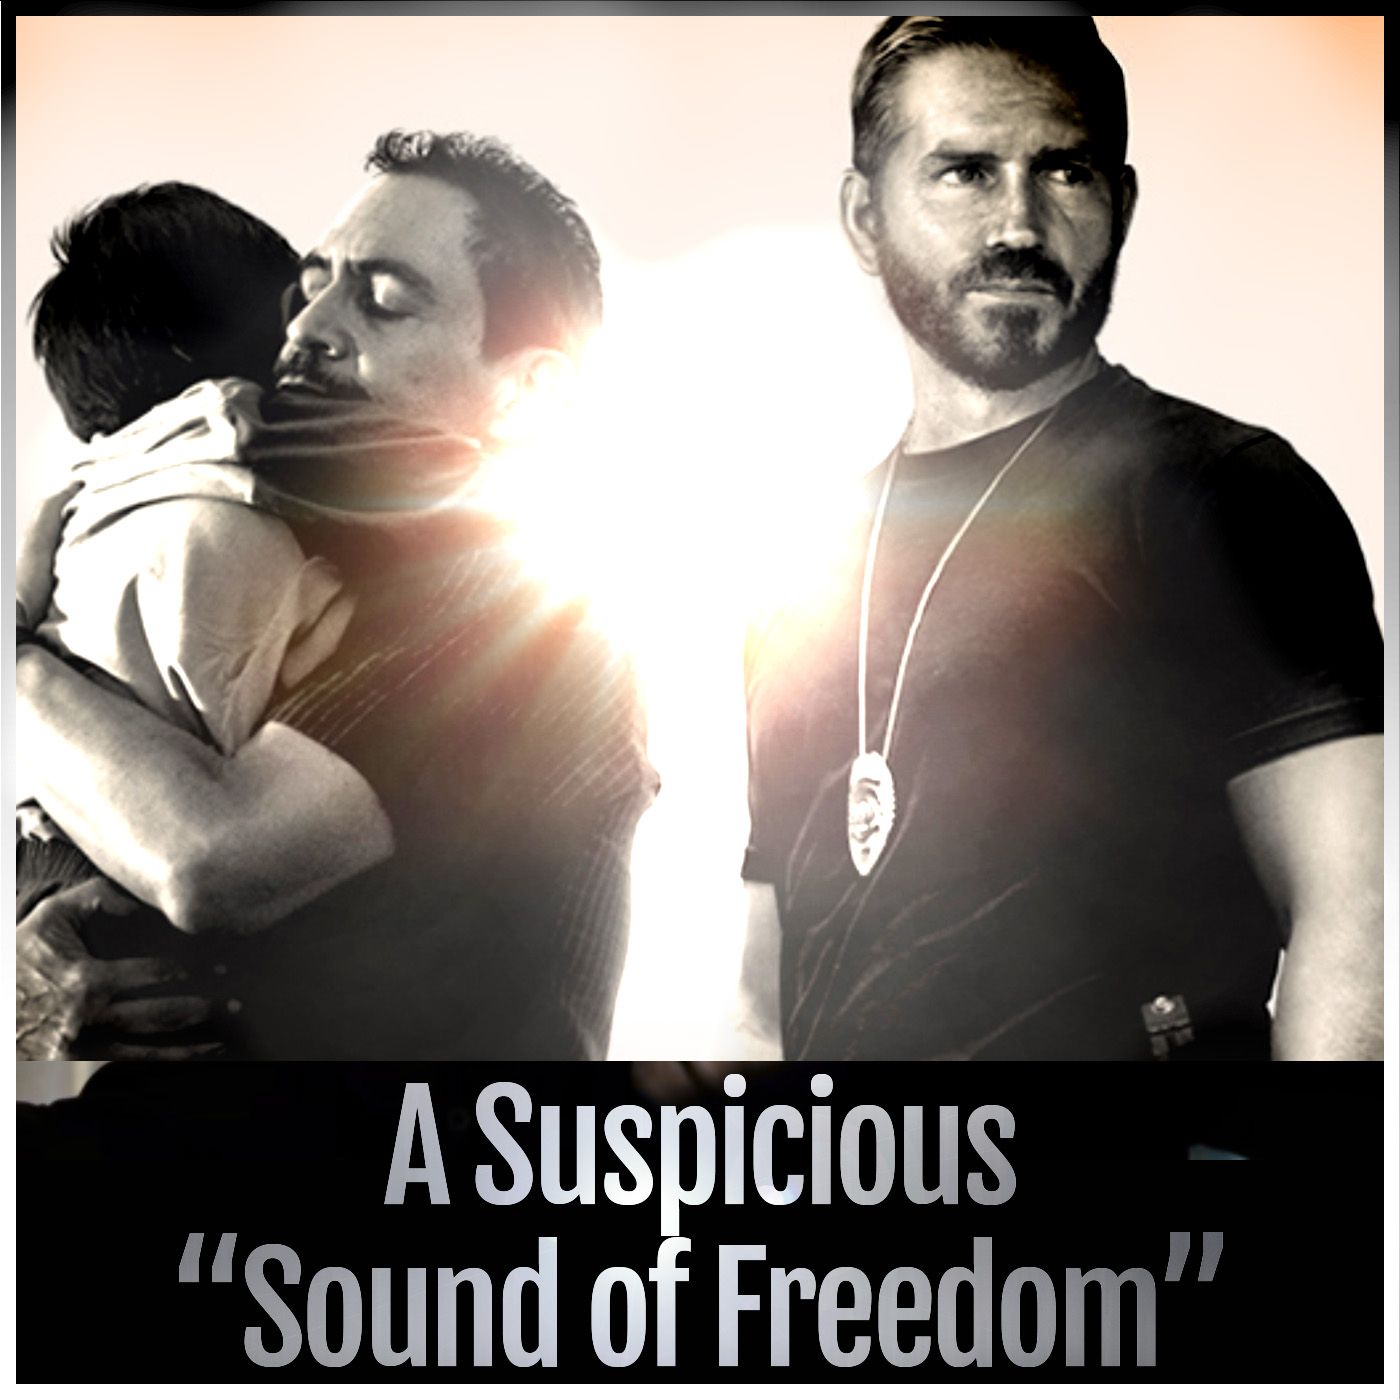 A Suspicious ”Sound of Freedom”